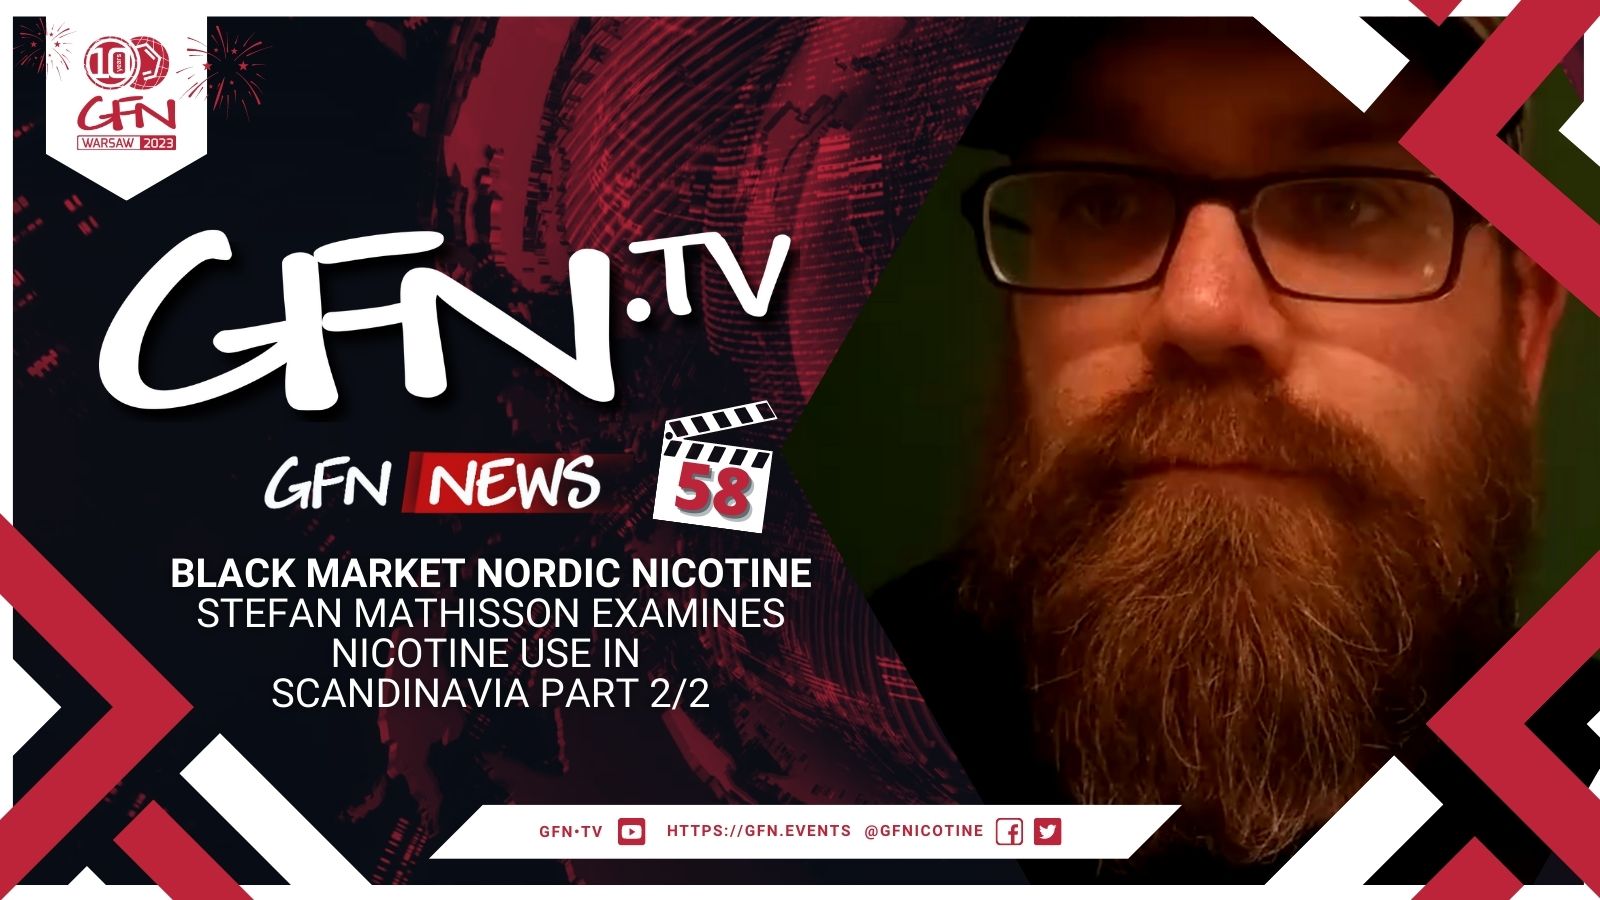 GFN News #58 | BLACK MARKET NORDIC NICOTINE | Stefan Mathisson examines nicotine use in Scandinavia PART 2/2